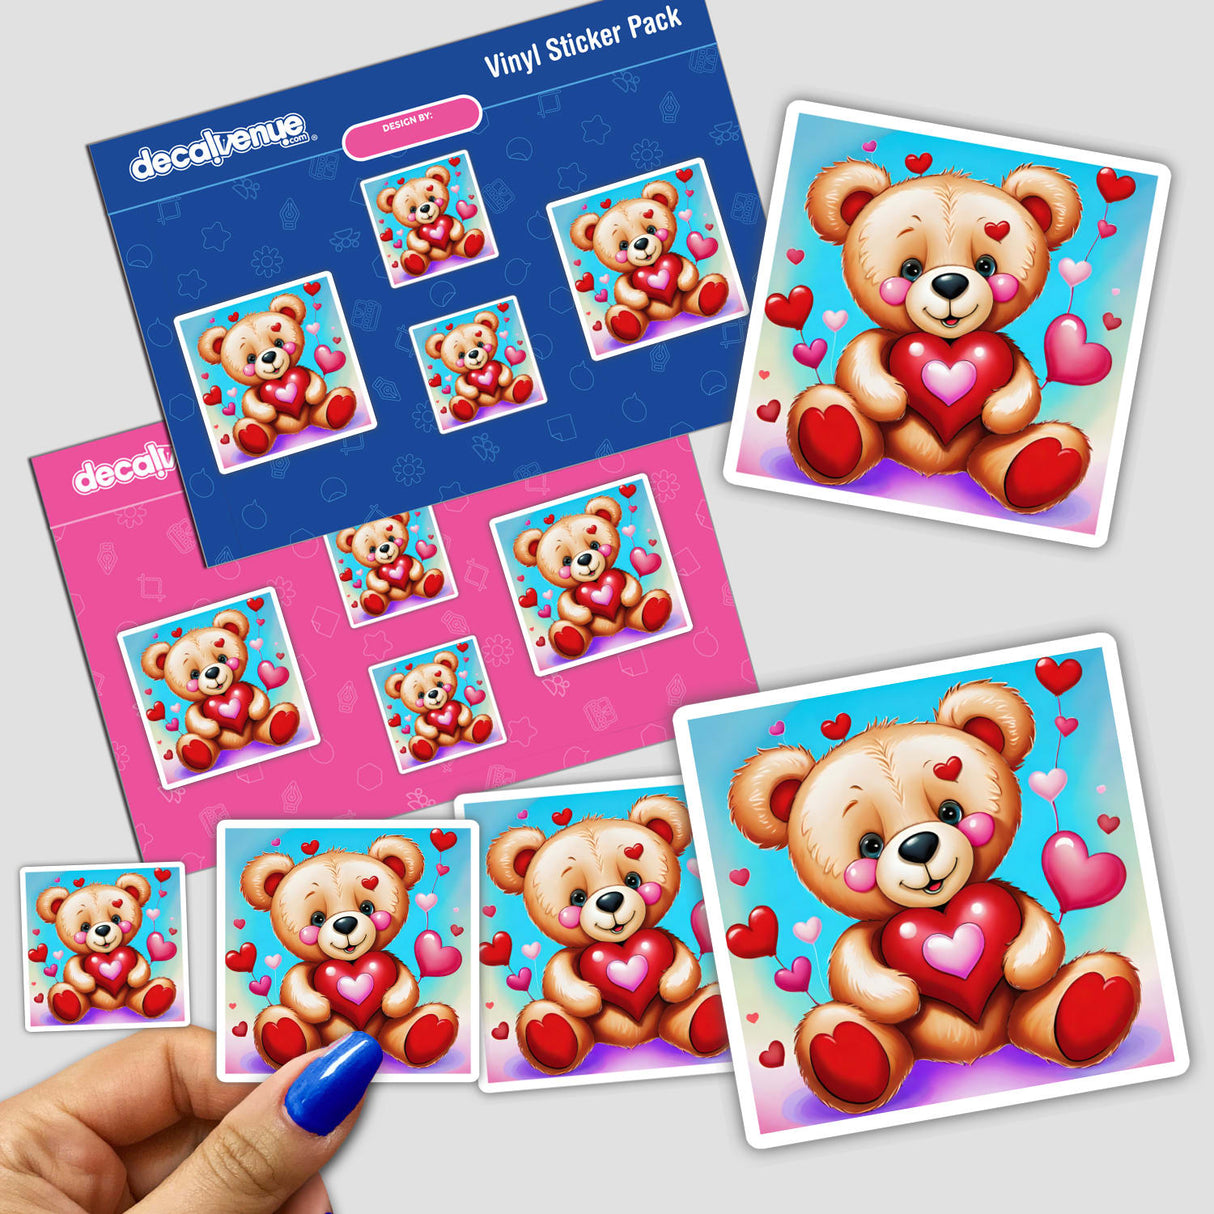 Teddy Bear Full of Hearts